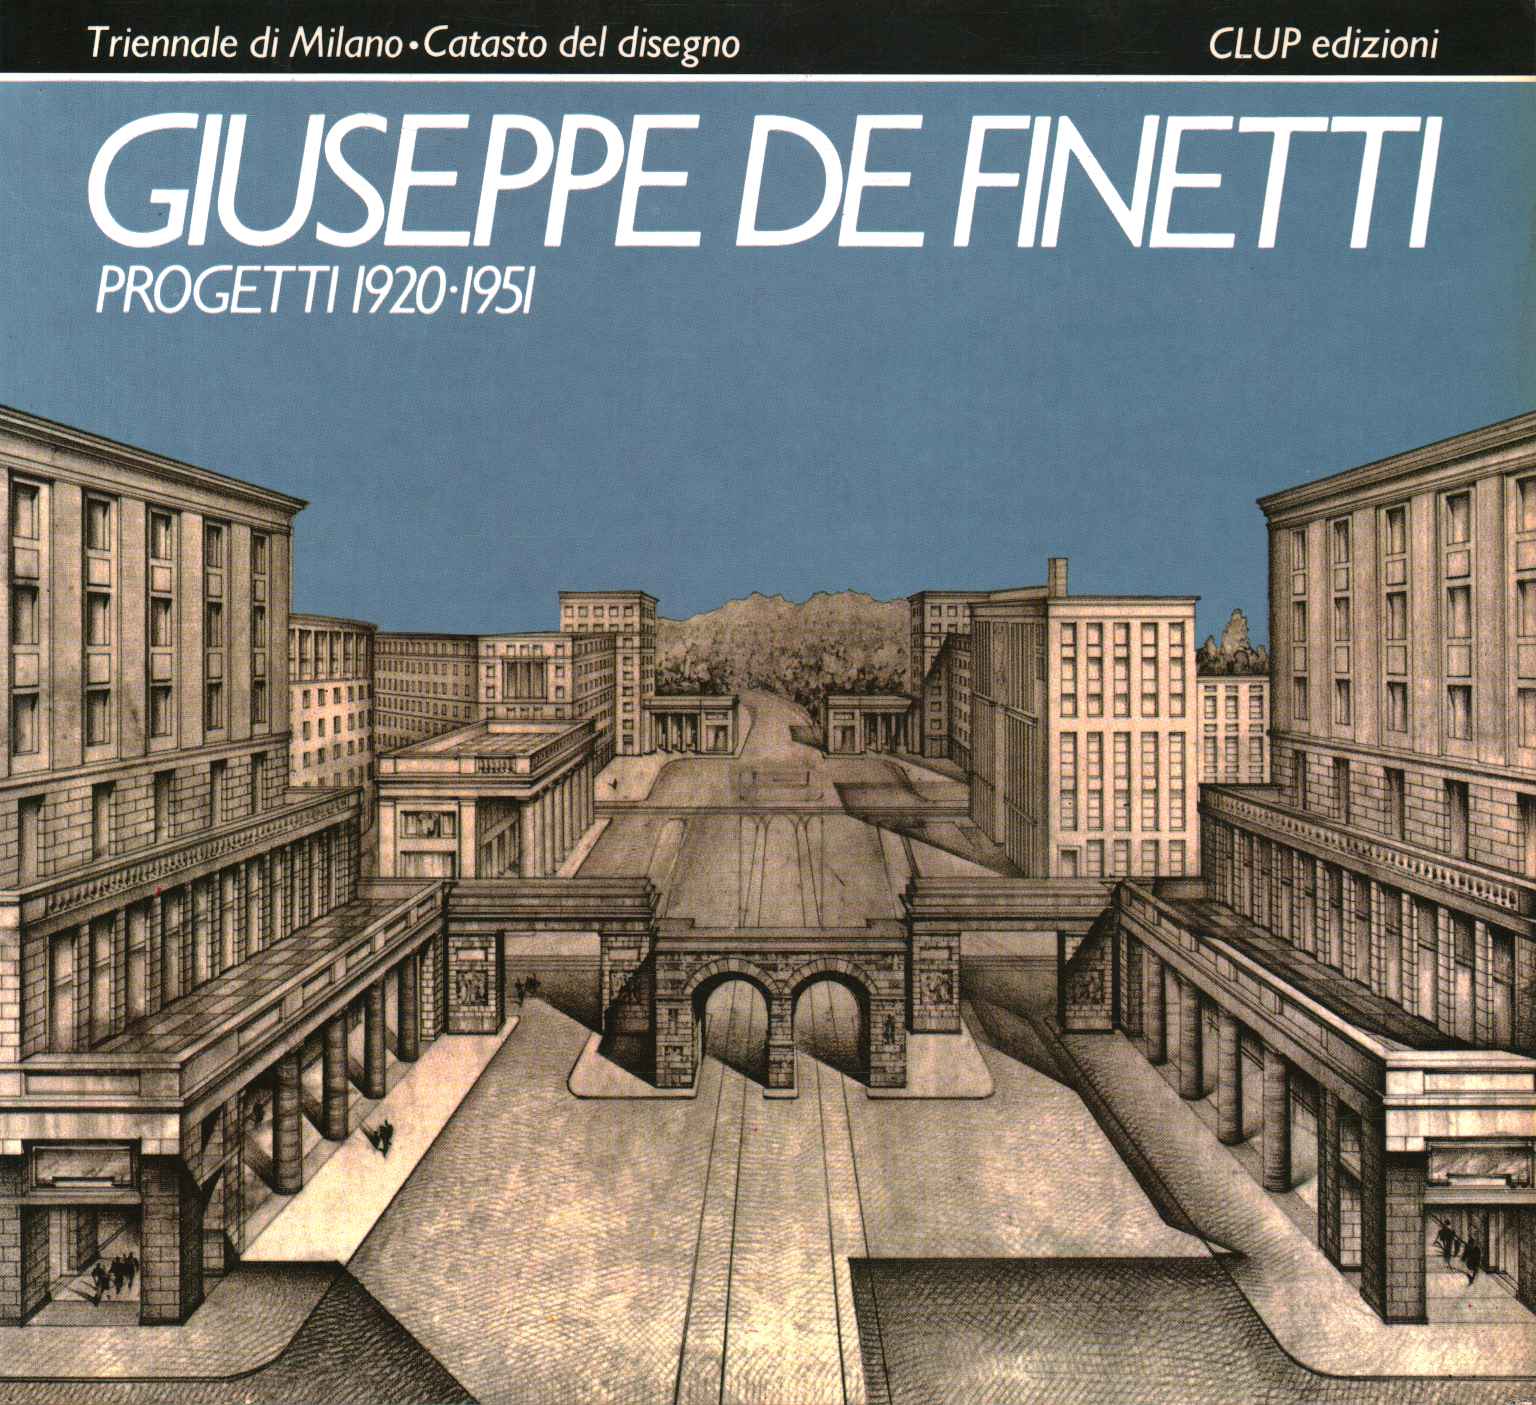 Giuseppe De Finetti. Projects 1920-1951